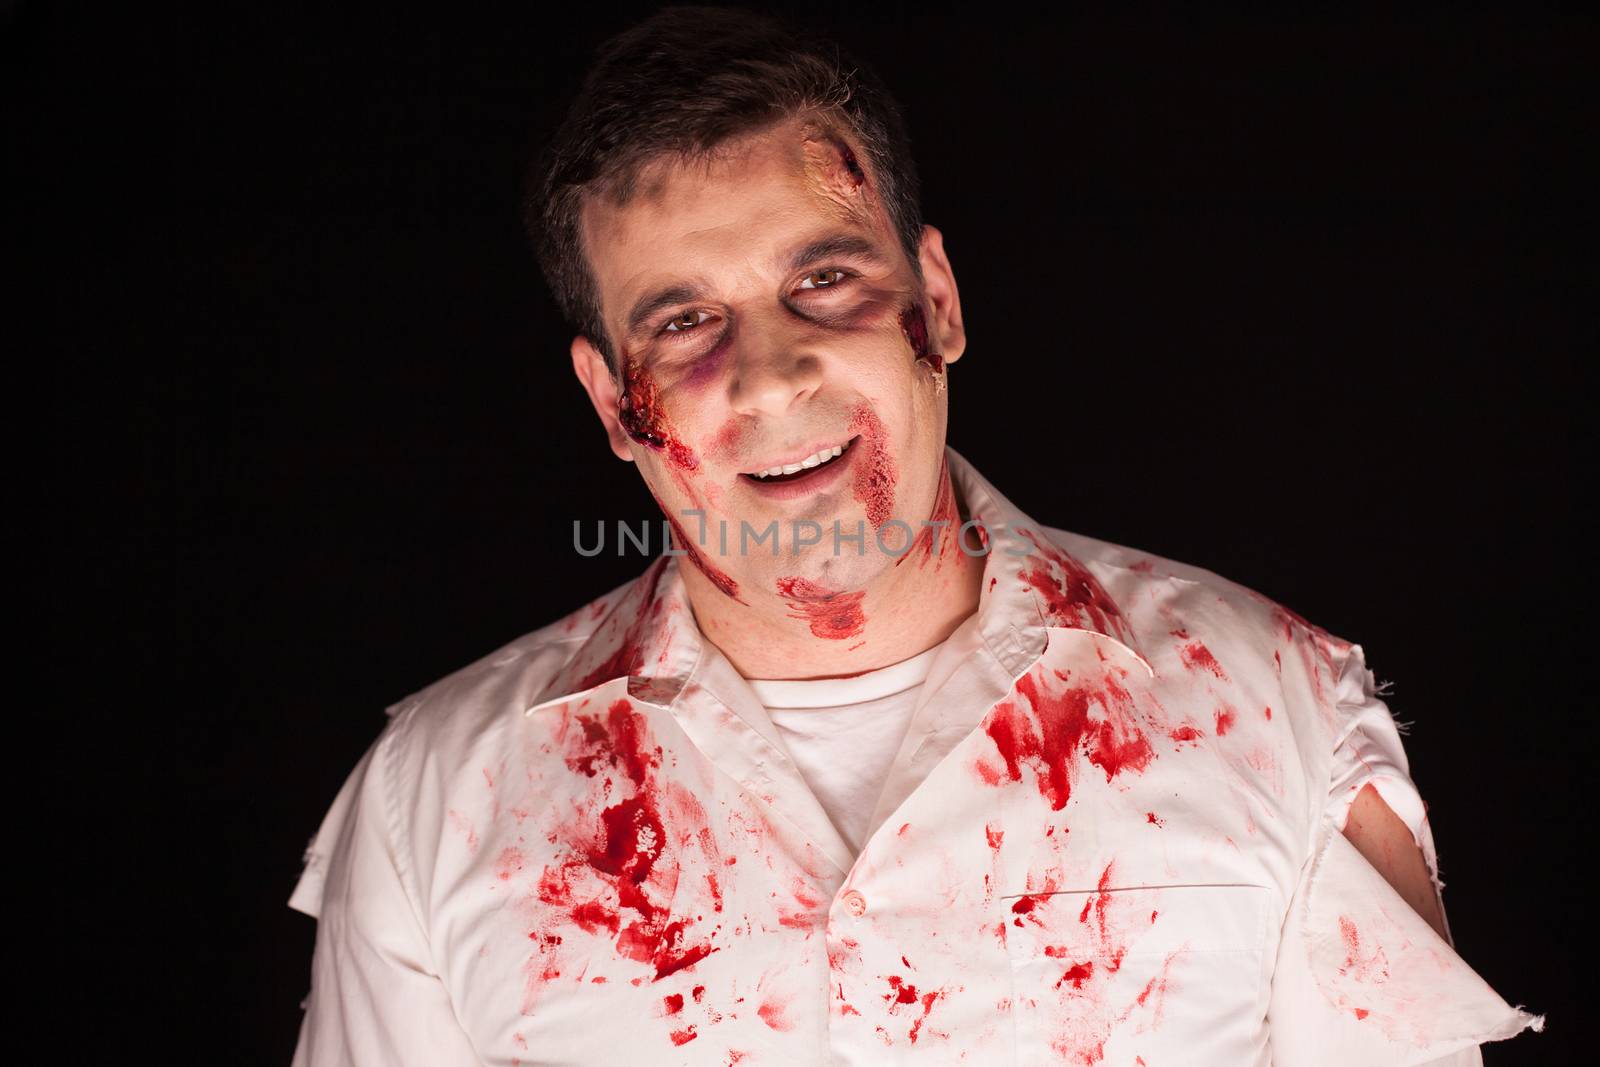 Man dressed up like a creepy zombie by DCStudio